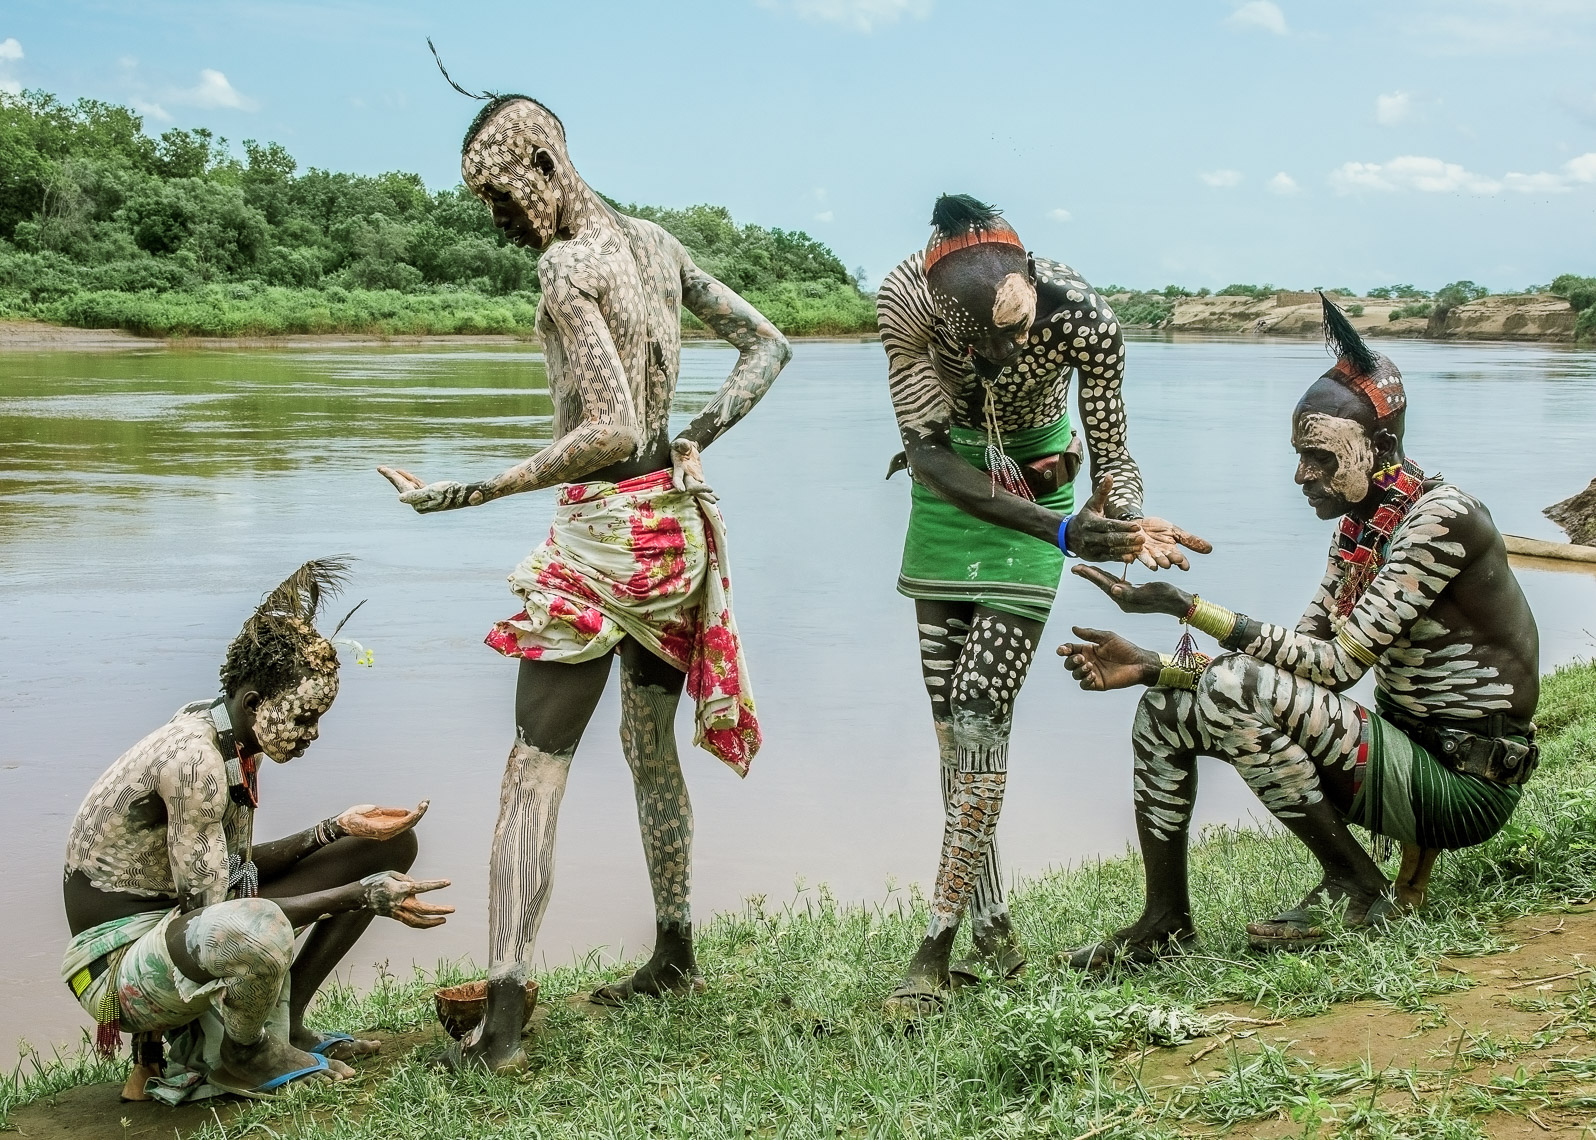 Kara Men body painting by Omo River, Ethiopia